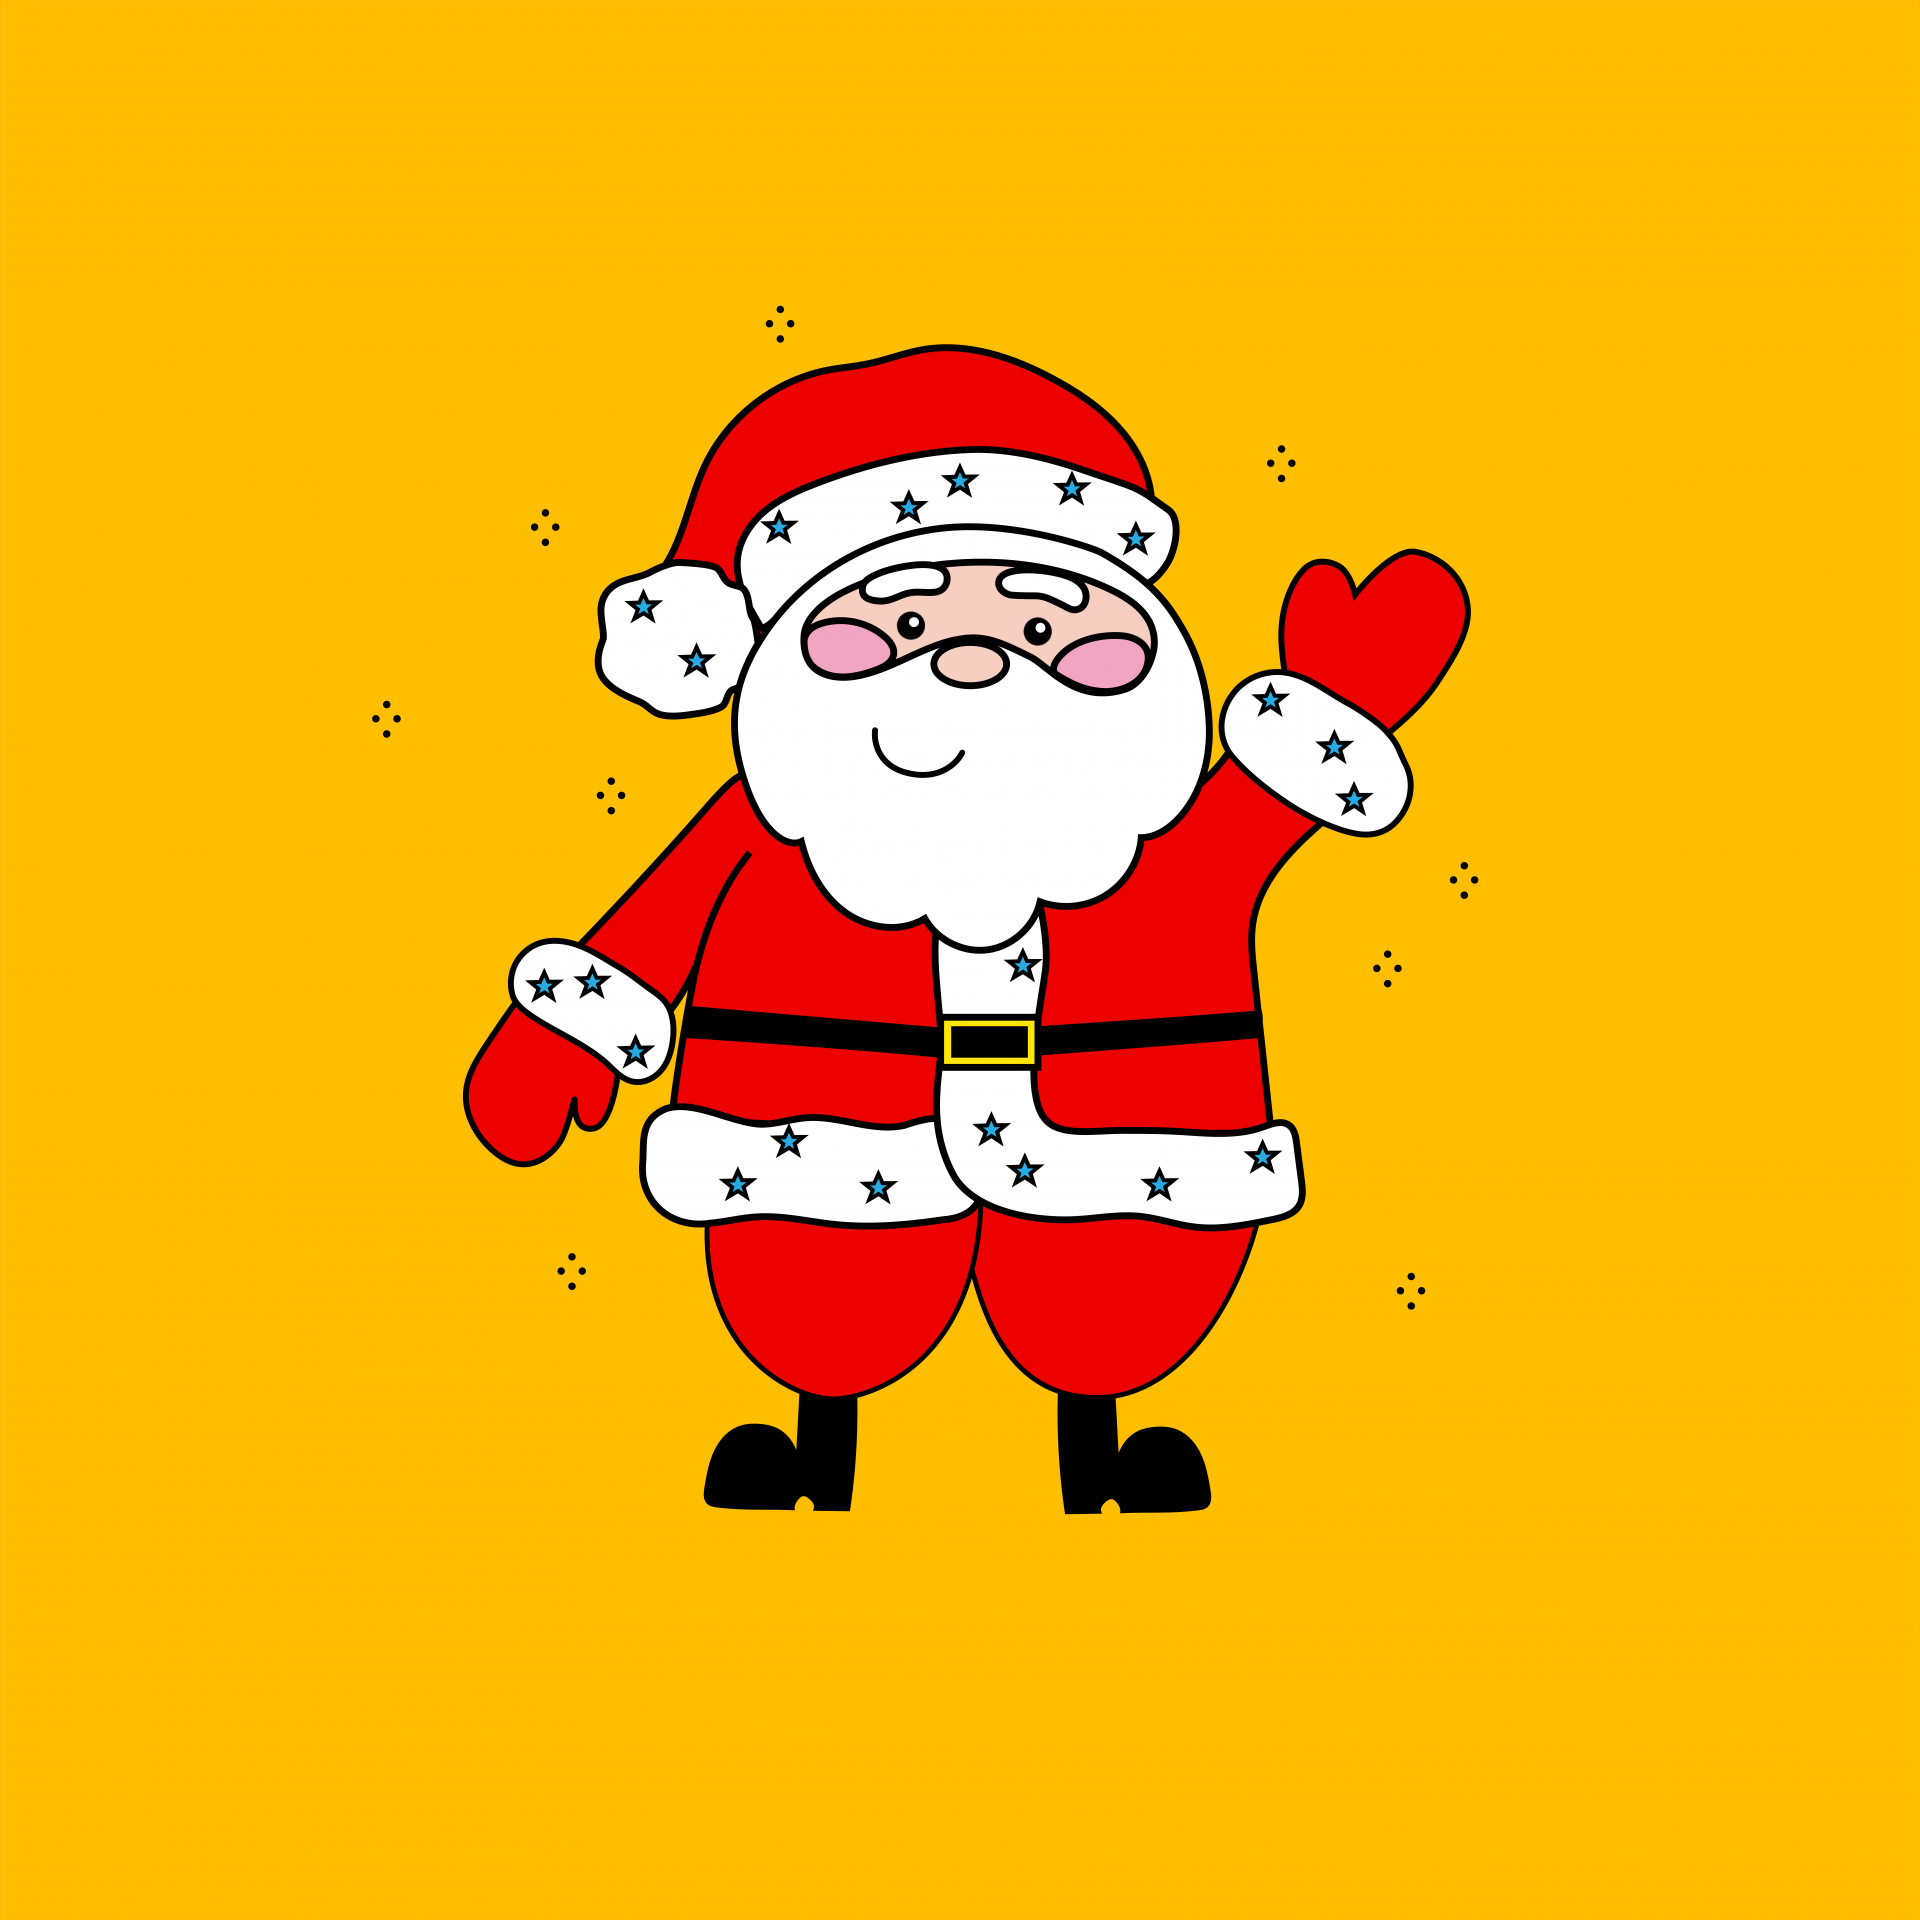 Santa Claus Illustration